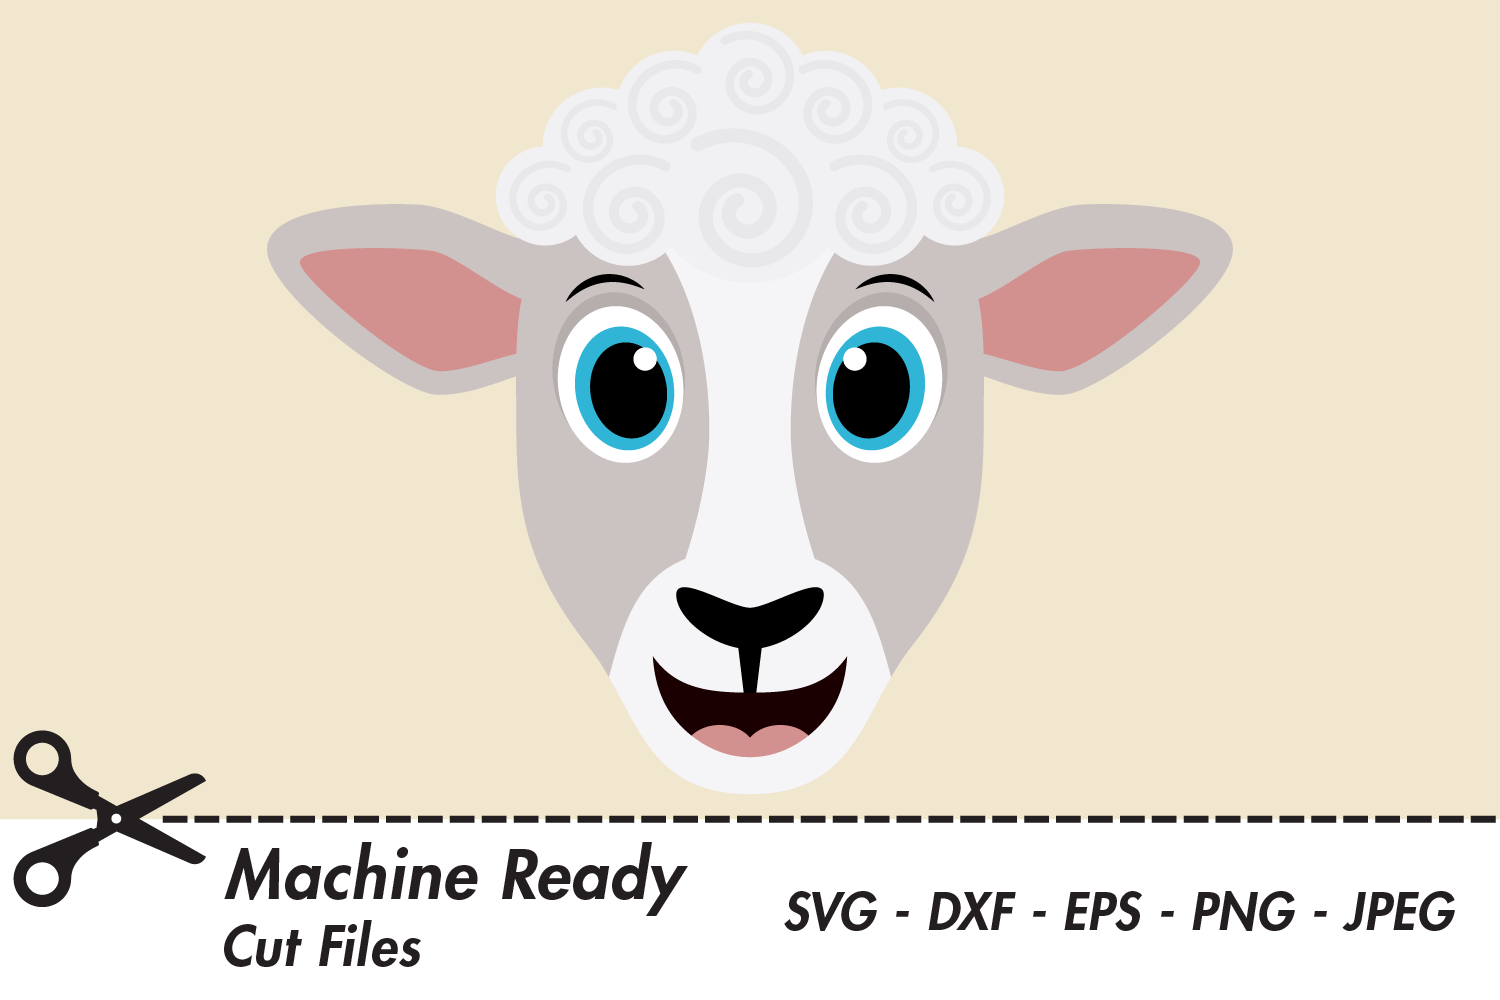 Download Cute Sheep SVG Cut Files, Happy Farm Animal Face